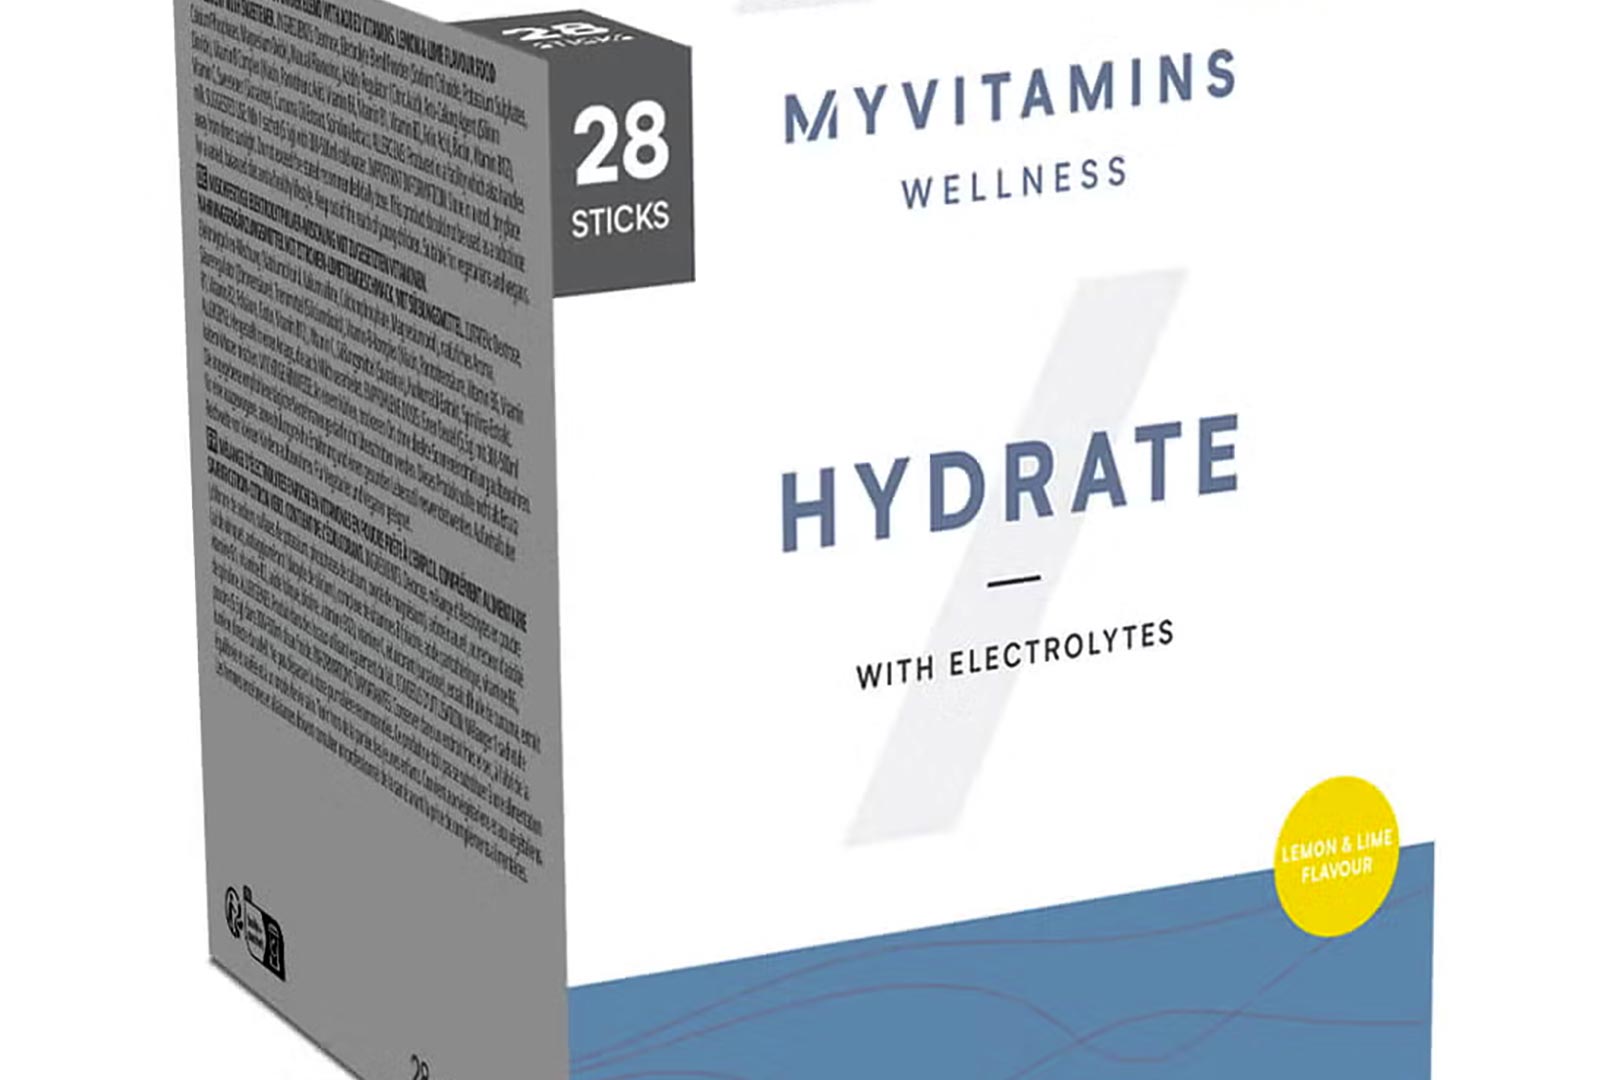 Myprotein Drastically Discountes Hydrate